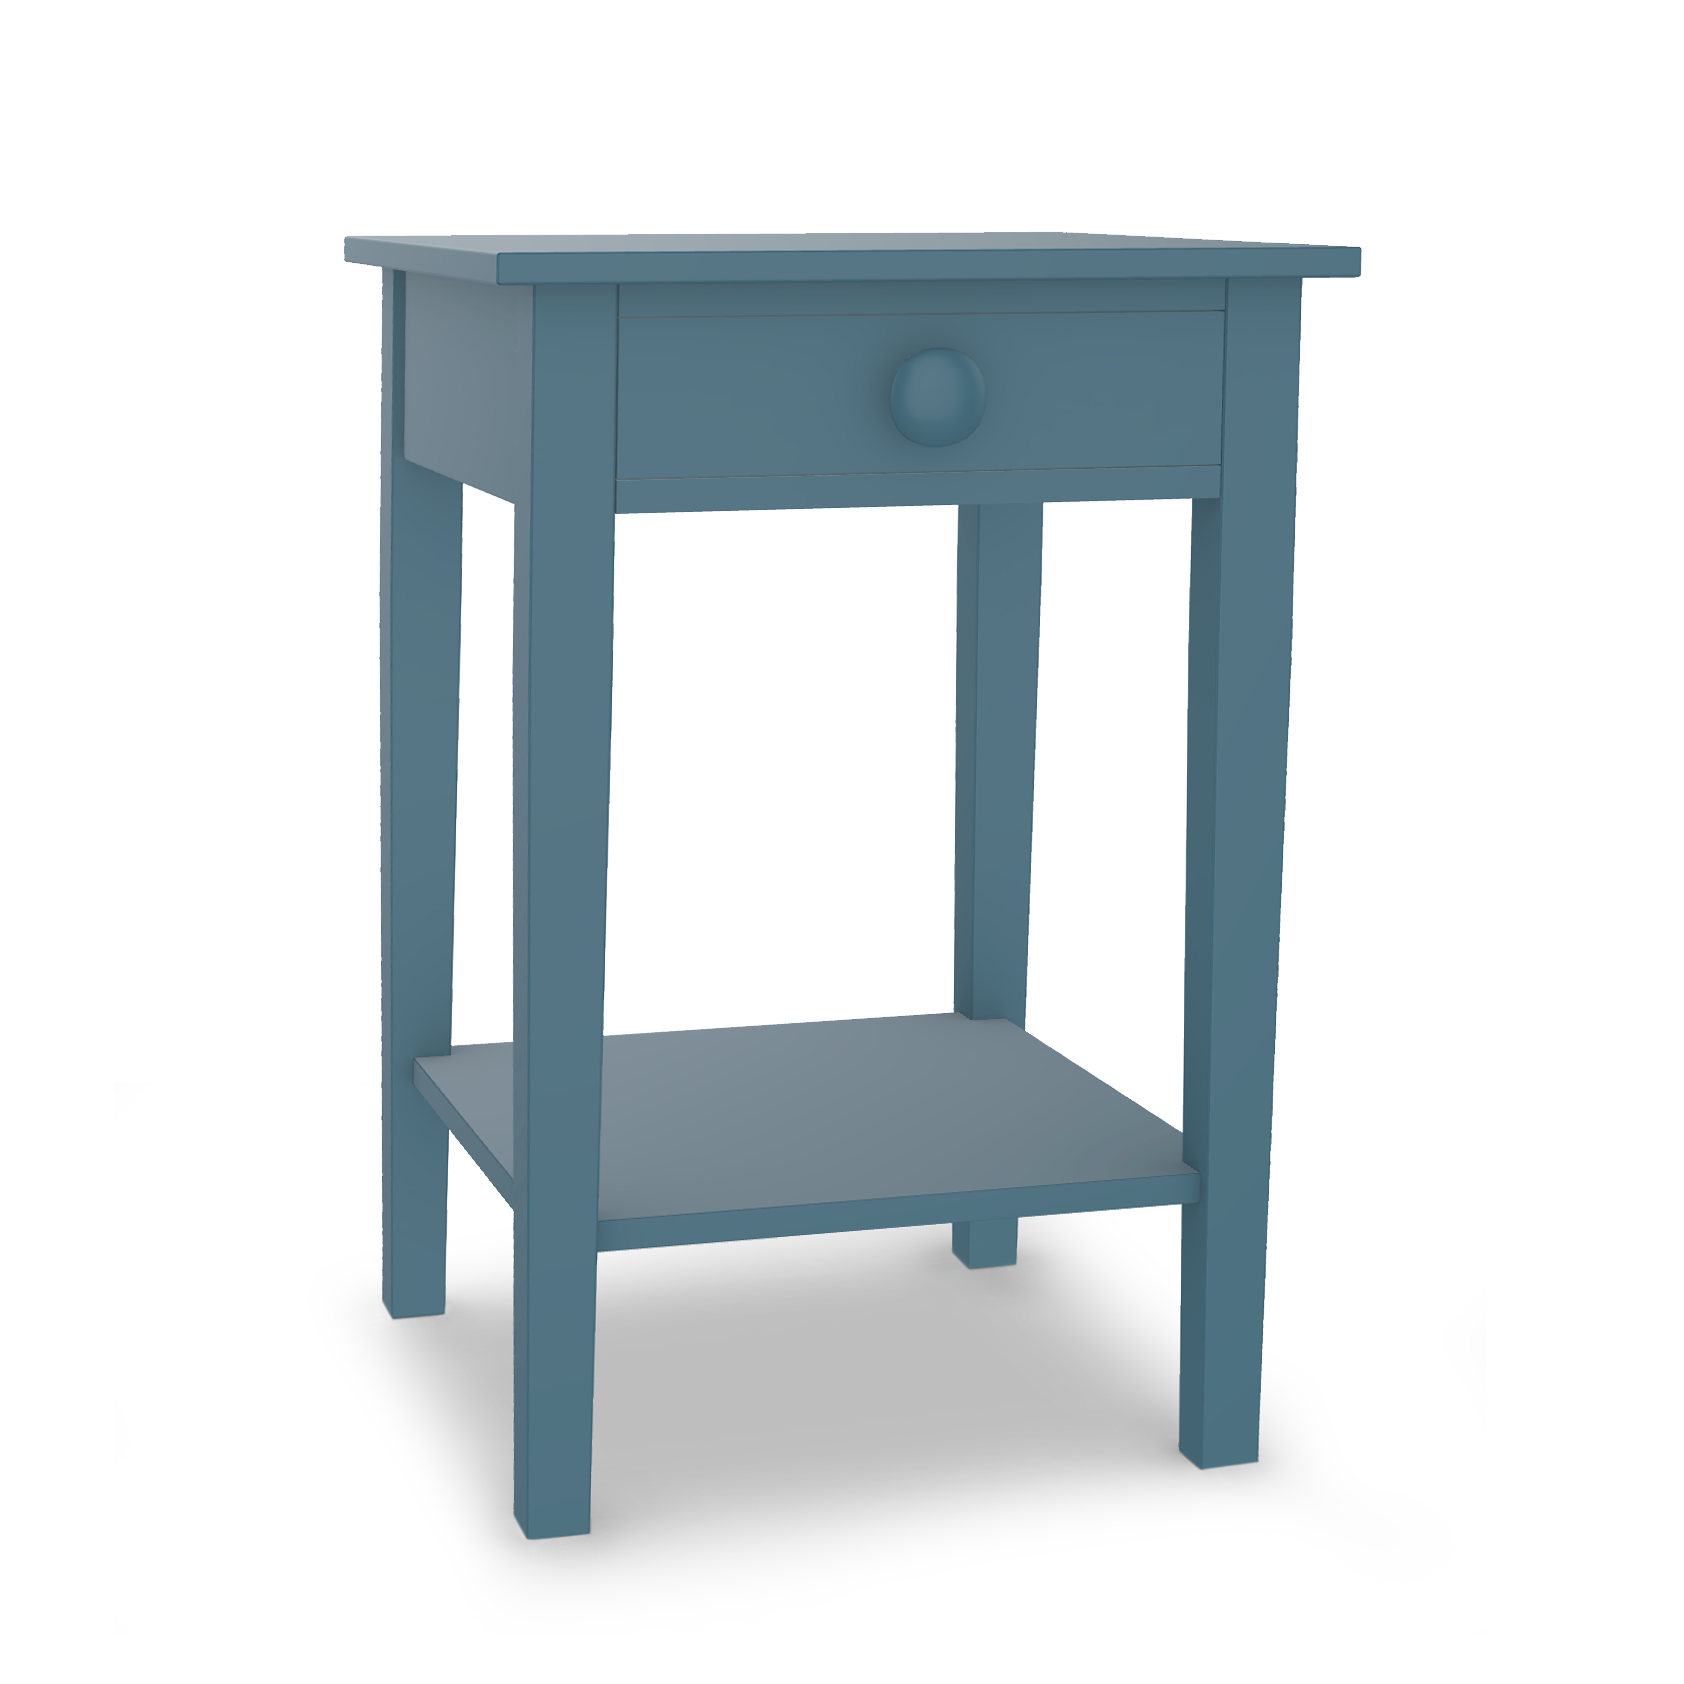 Addy Side Table with Shelf in Bluestone - SAMPLE SALE